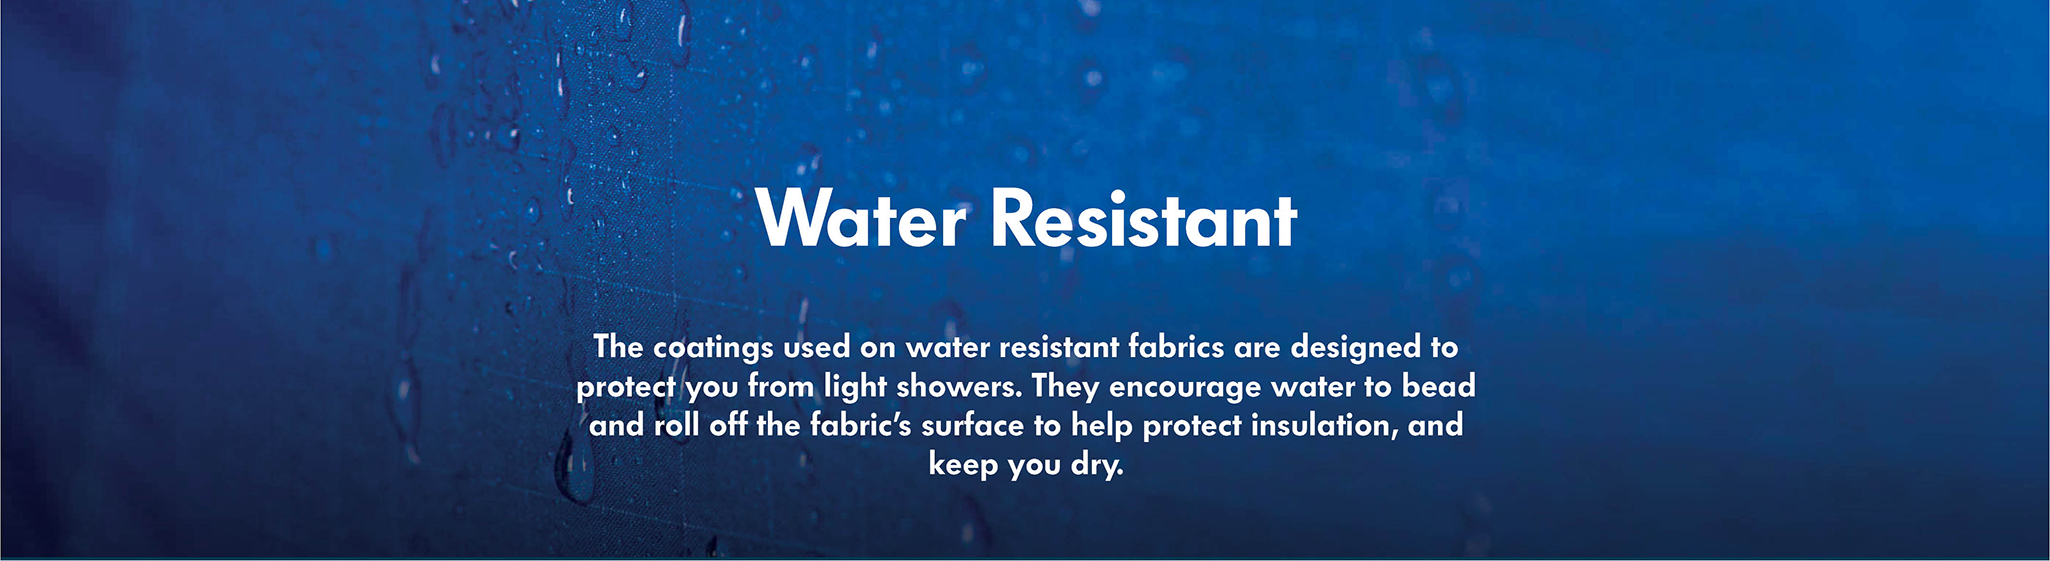 Water Resistant - designed for light rain showers